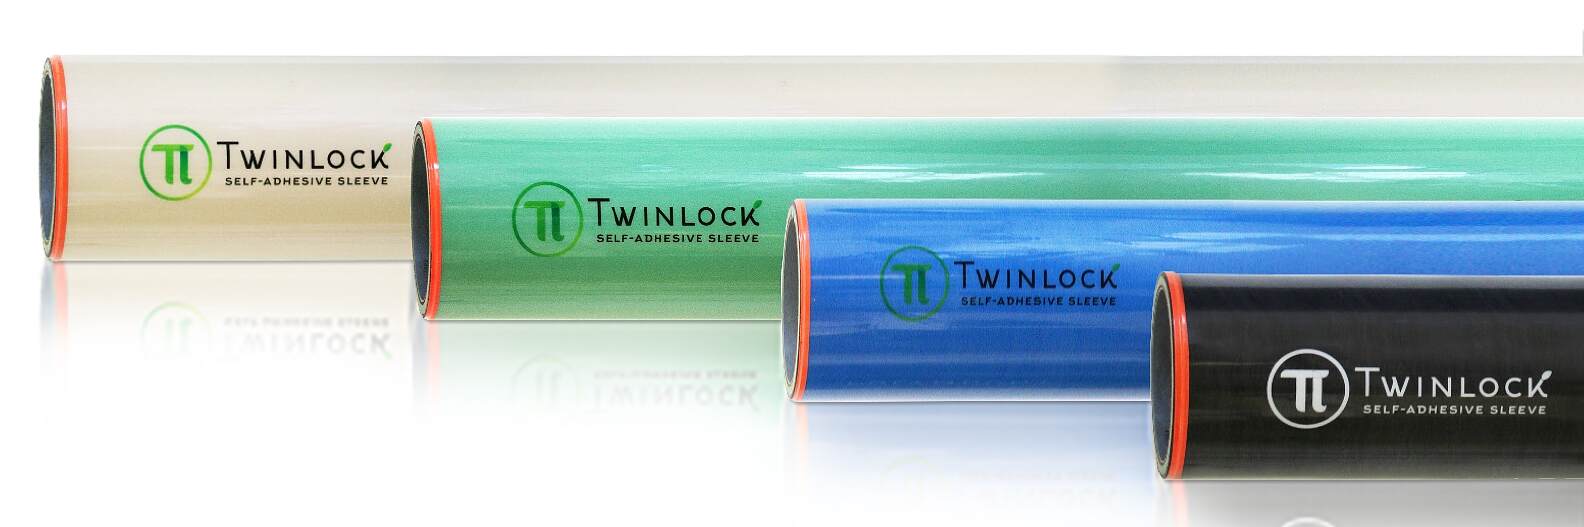 Twinlock Sleeves - soft medium hard